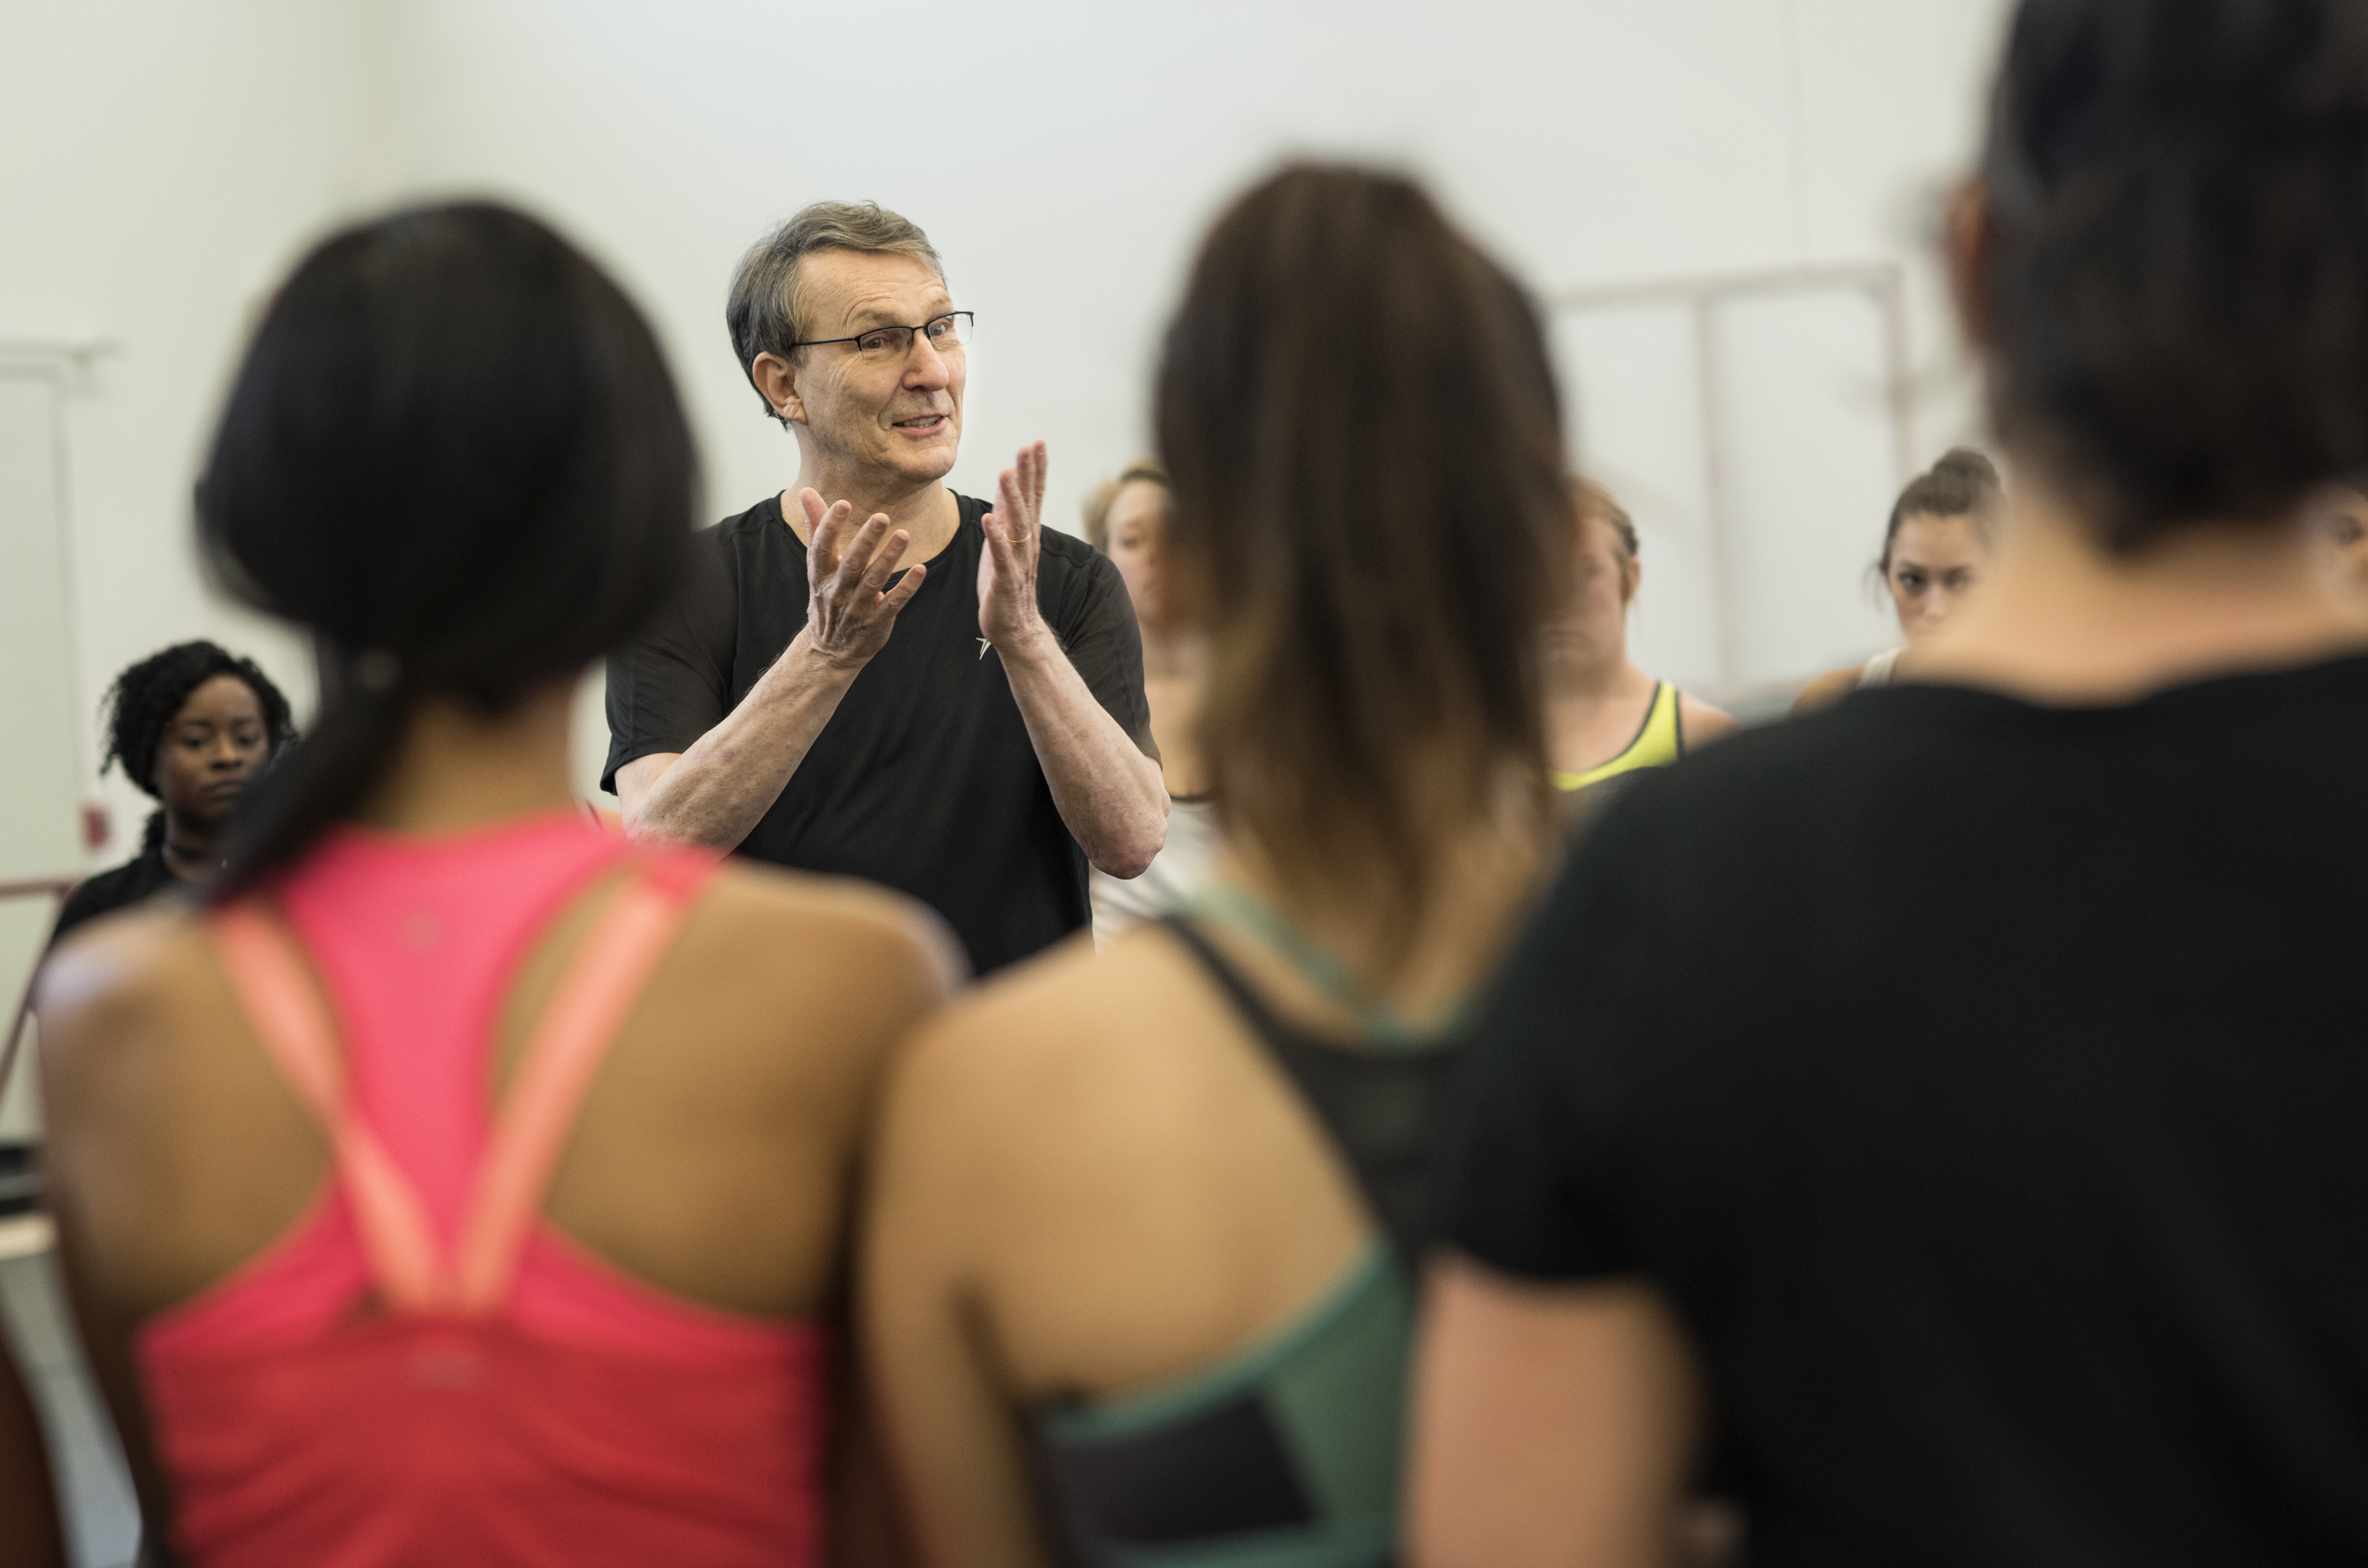 Choreographer Bill Evans led rehearsals for University of North Texas dance stud